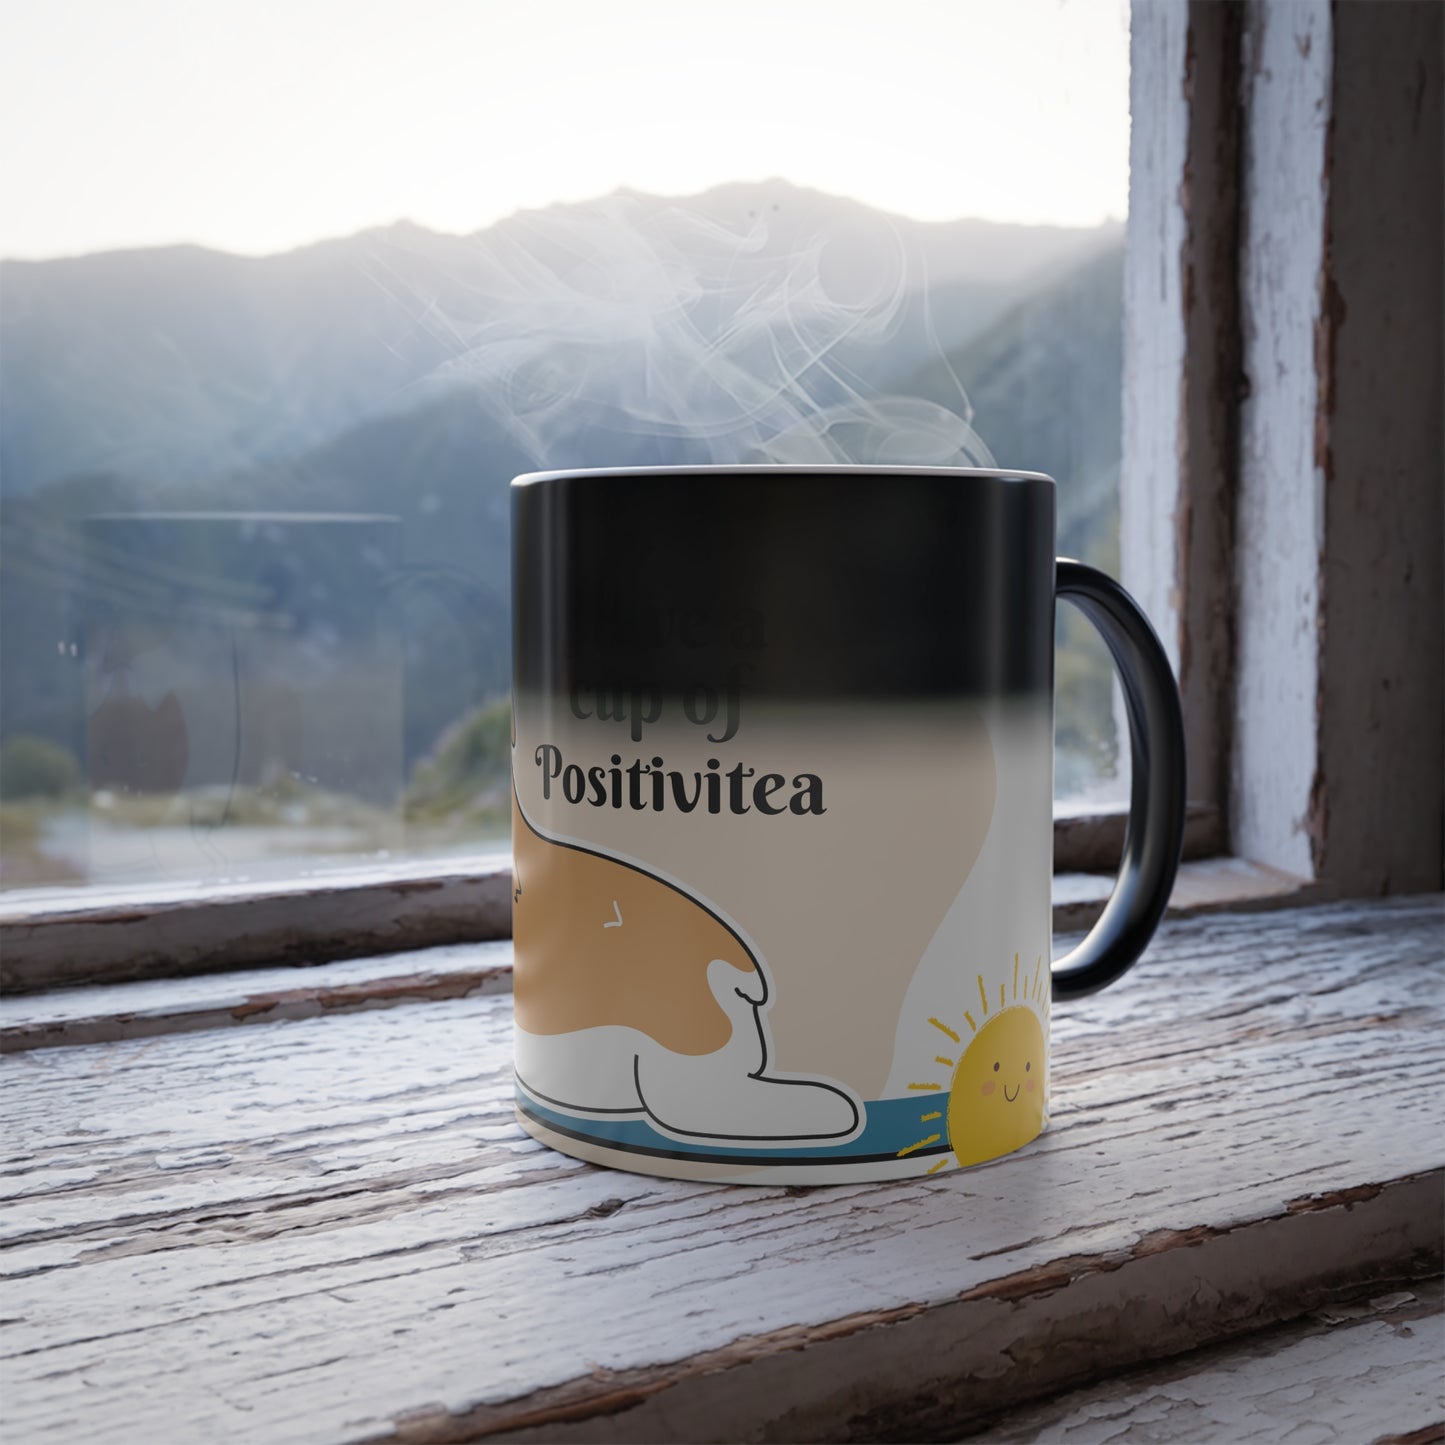 Have A Cup of Positivitea!